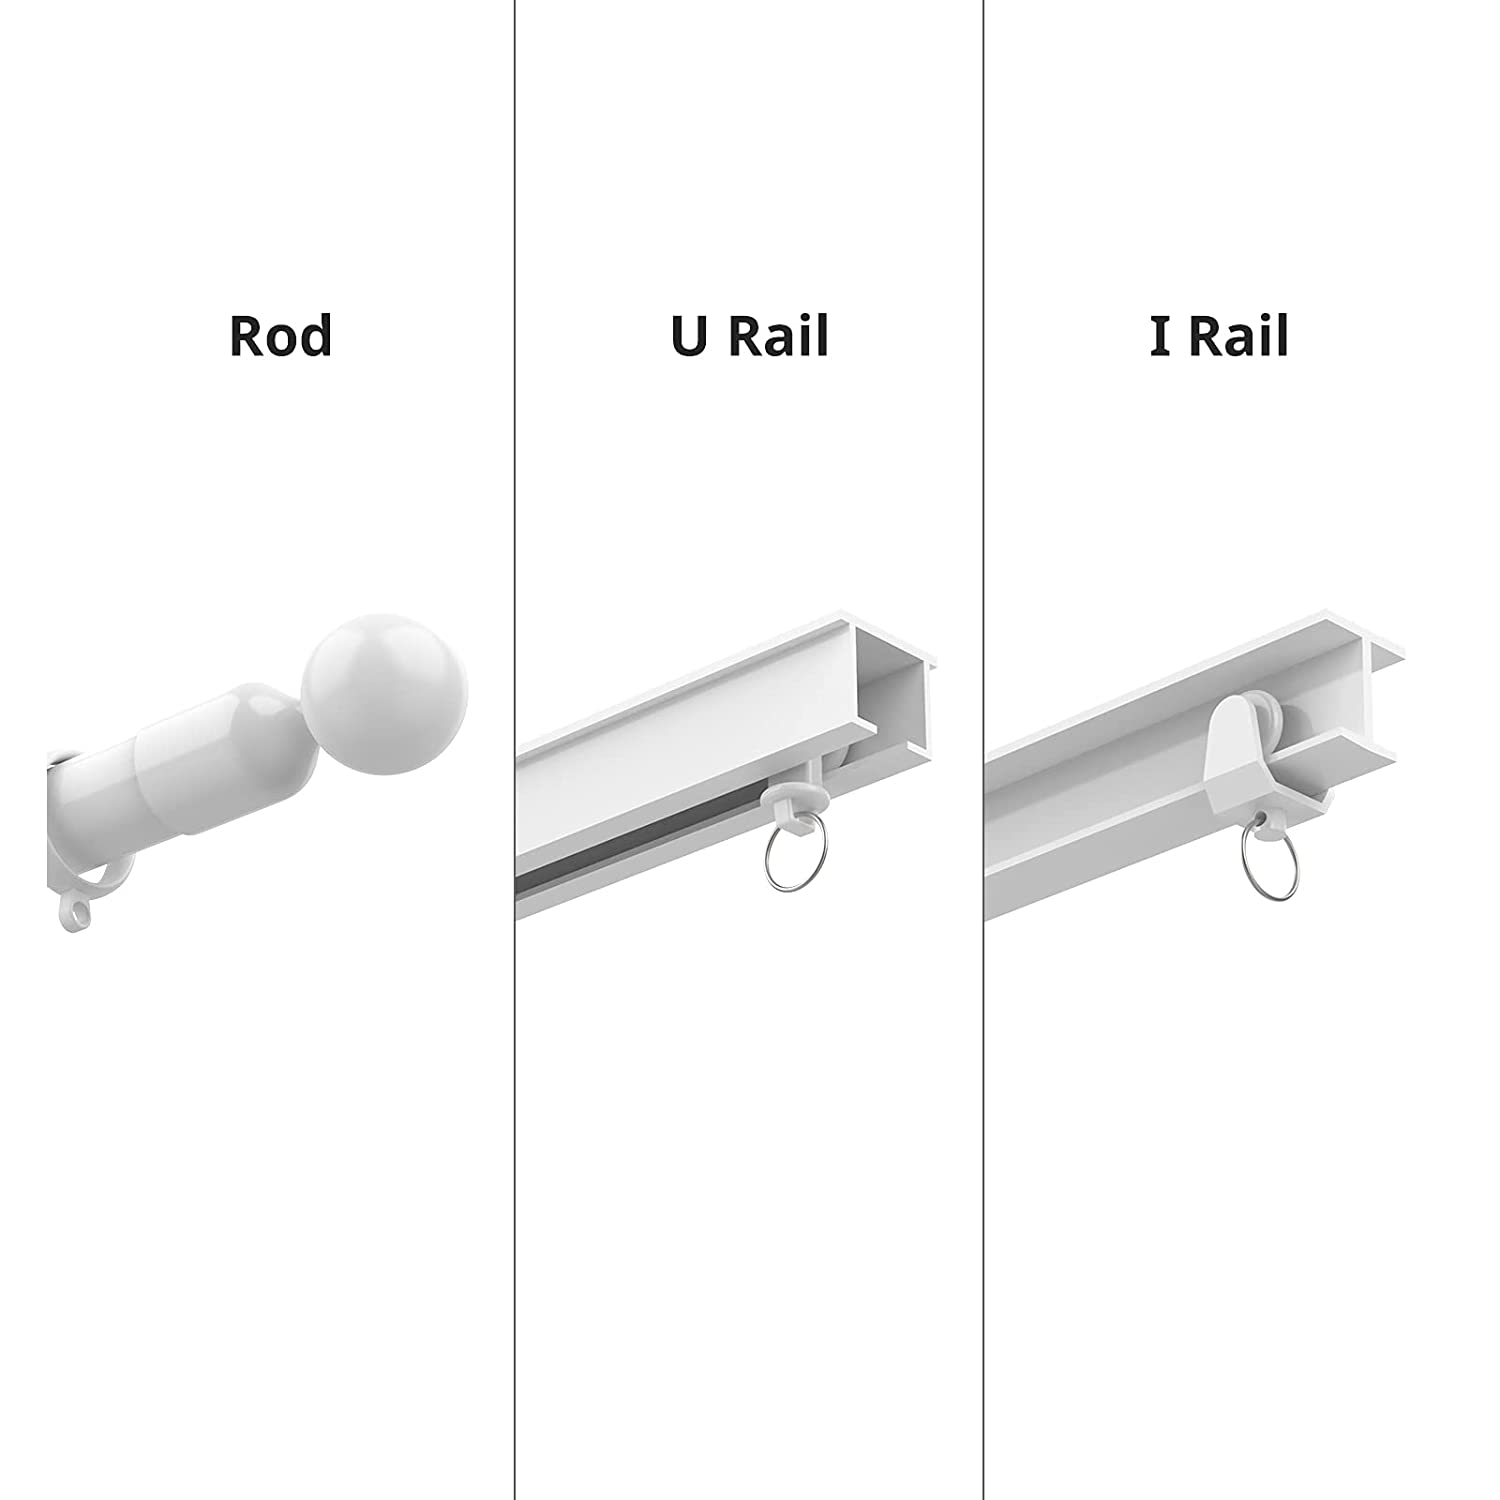 SwitchBot Curtain (U Rail) | Smart Curtain Controller -  Add SwitchBot Hub Mini to Make it Compatible with Alexa, Google Home